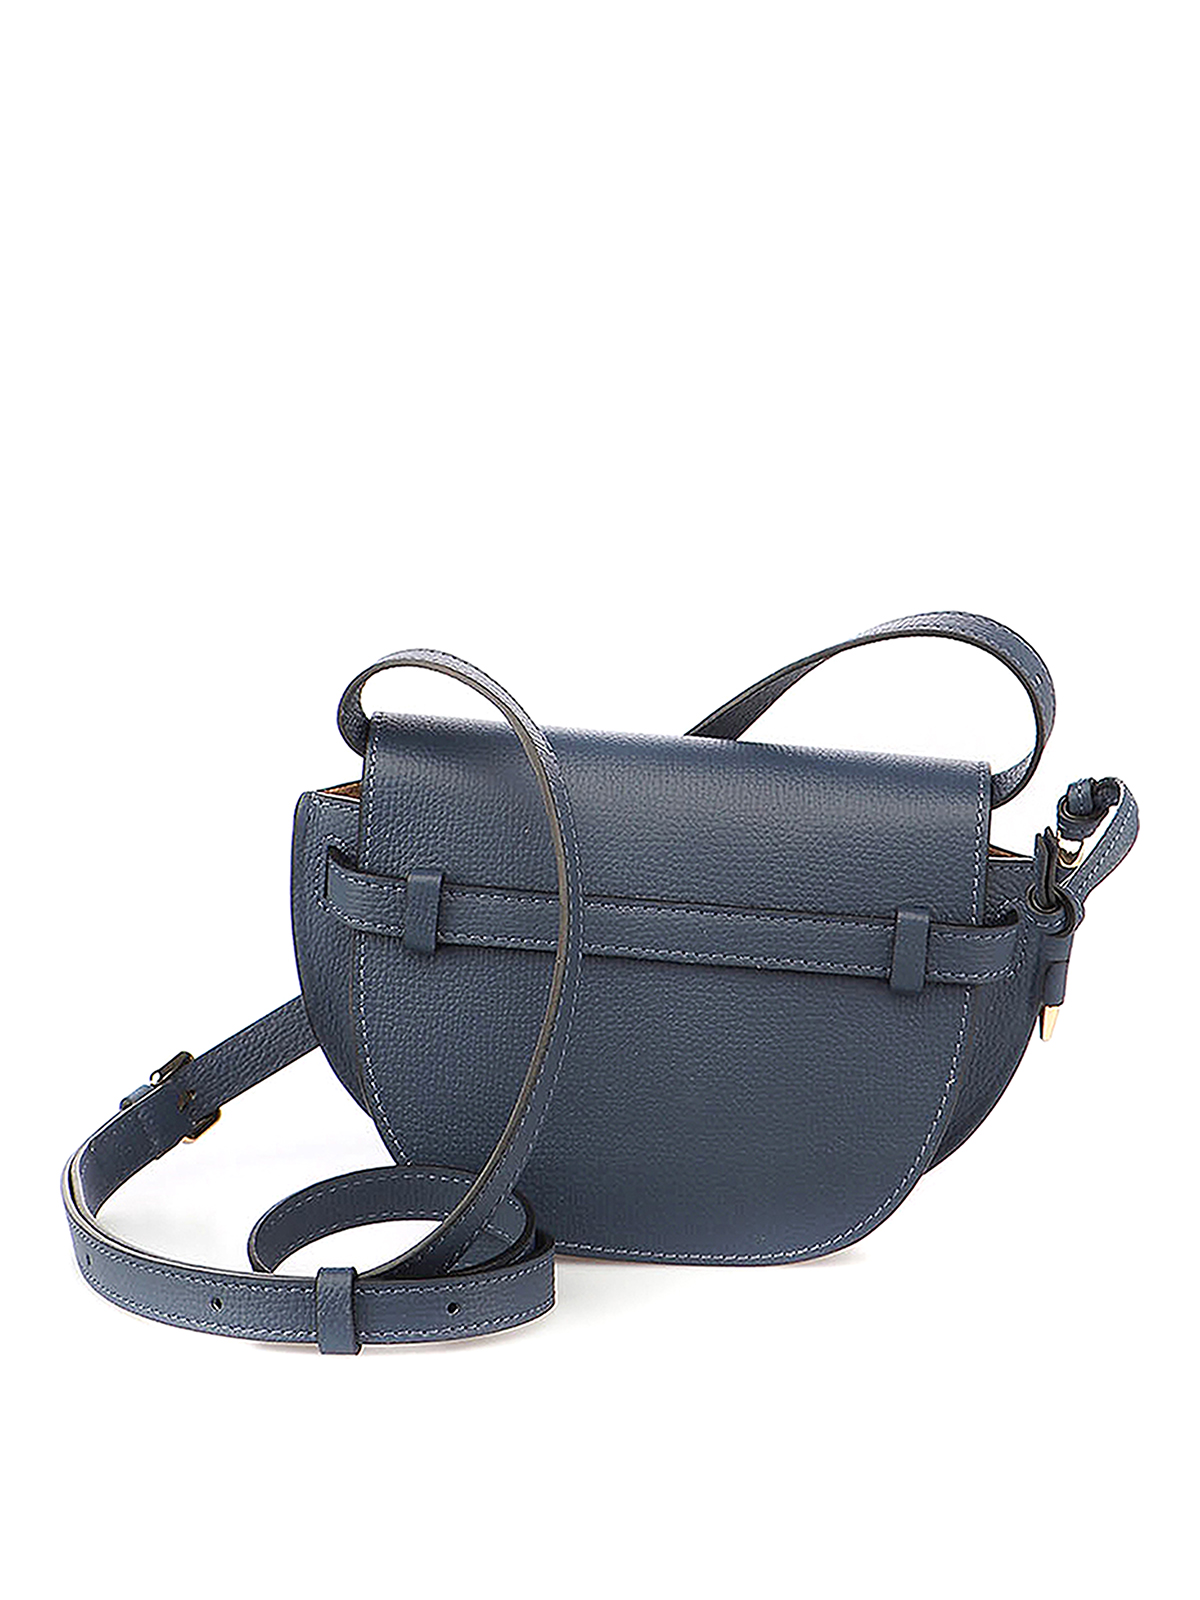 Gate mini leather cross-body bag | LOEWE